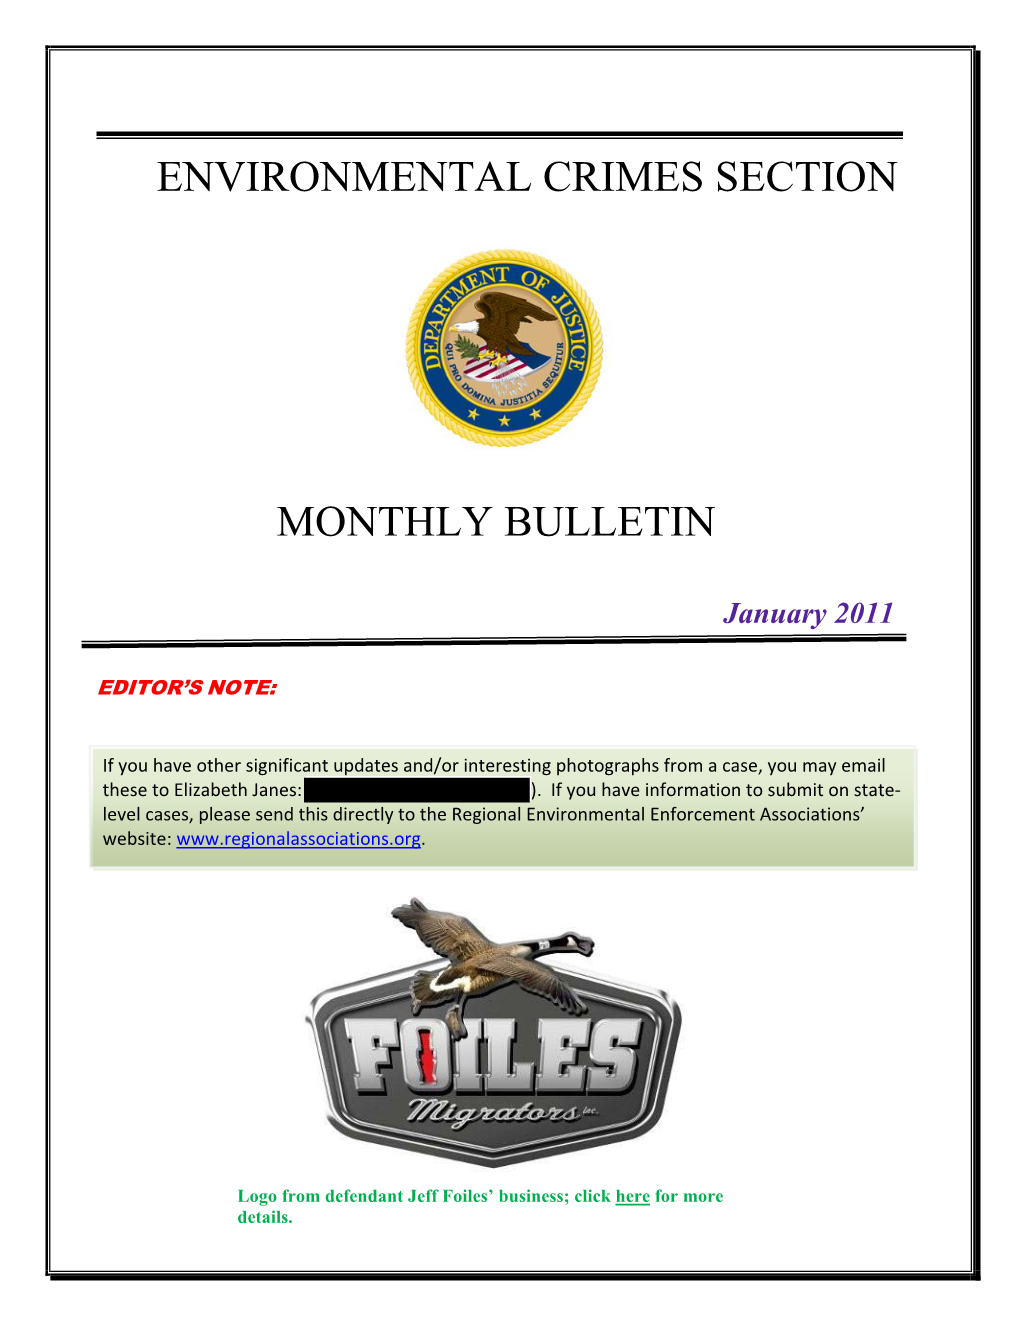 ECS Bulletin January 2011